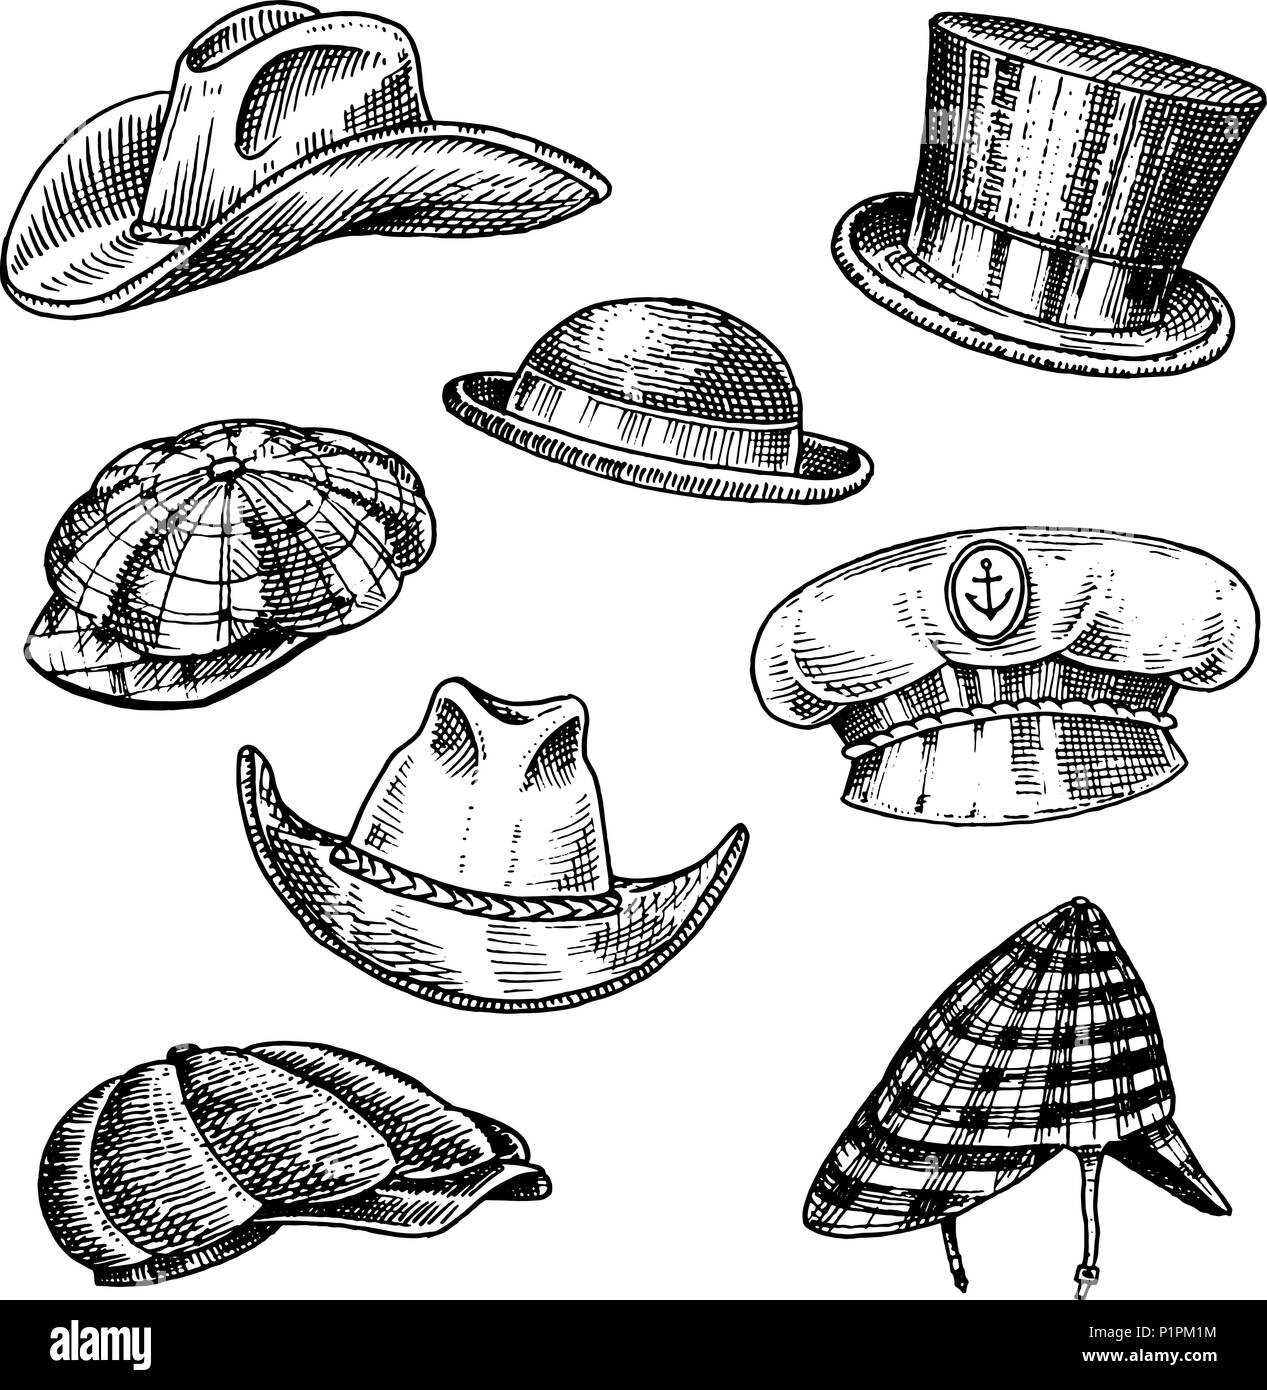 Summer Hats vintage collection for elegant men. Fedora Derby Deerstalker Homburg Bowler Straw Beret Captain Cowboy Porkpie Boater Peaked cap. Retro fashion set. English style. Hand drawn sketch. Stock Vector